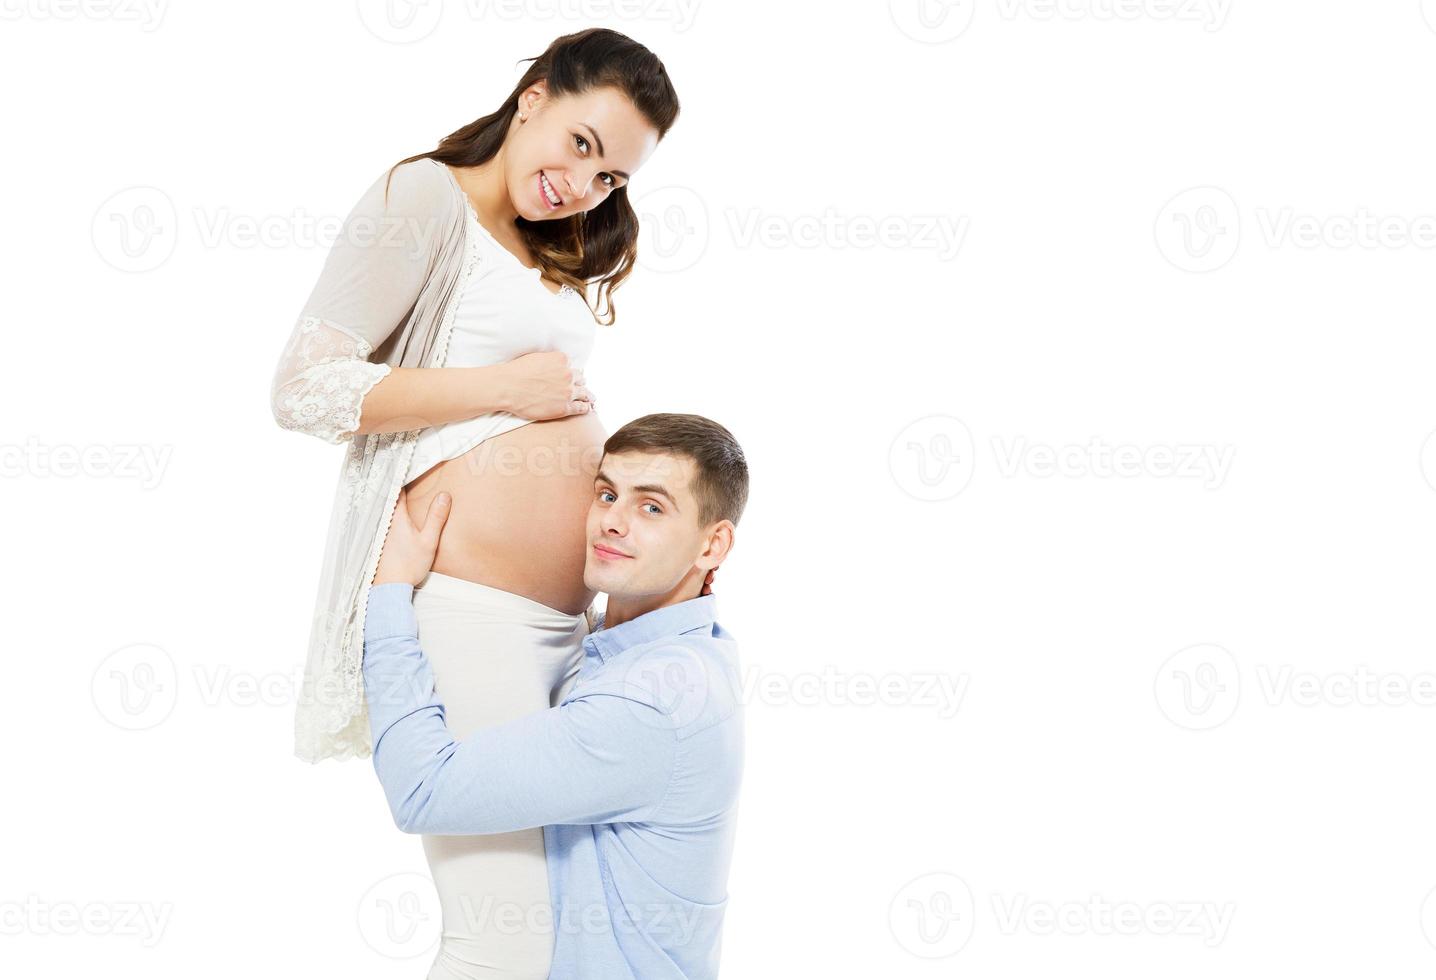 ung man lyssnar på sin frus gravida mage på en vit bakgrund, kvinna graviditet foto